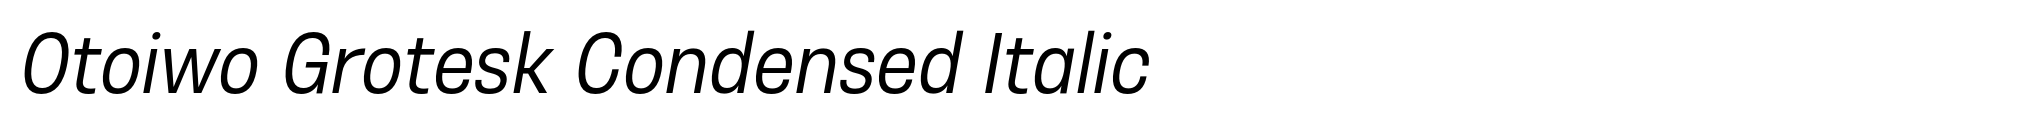 Otoiwo Grotesk Condensed Italic image